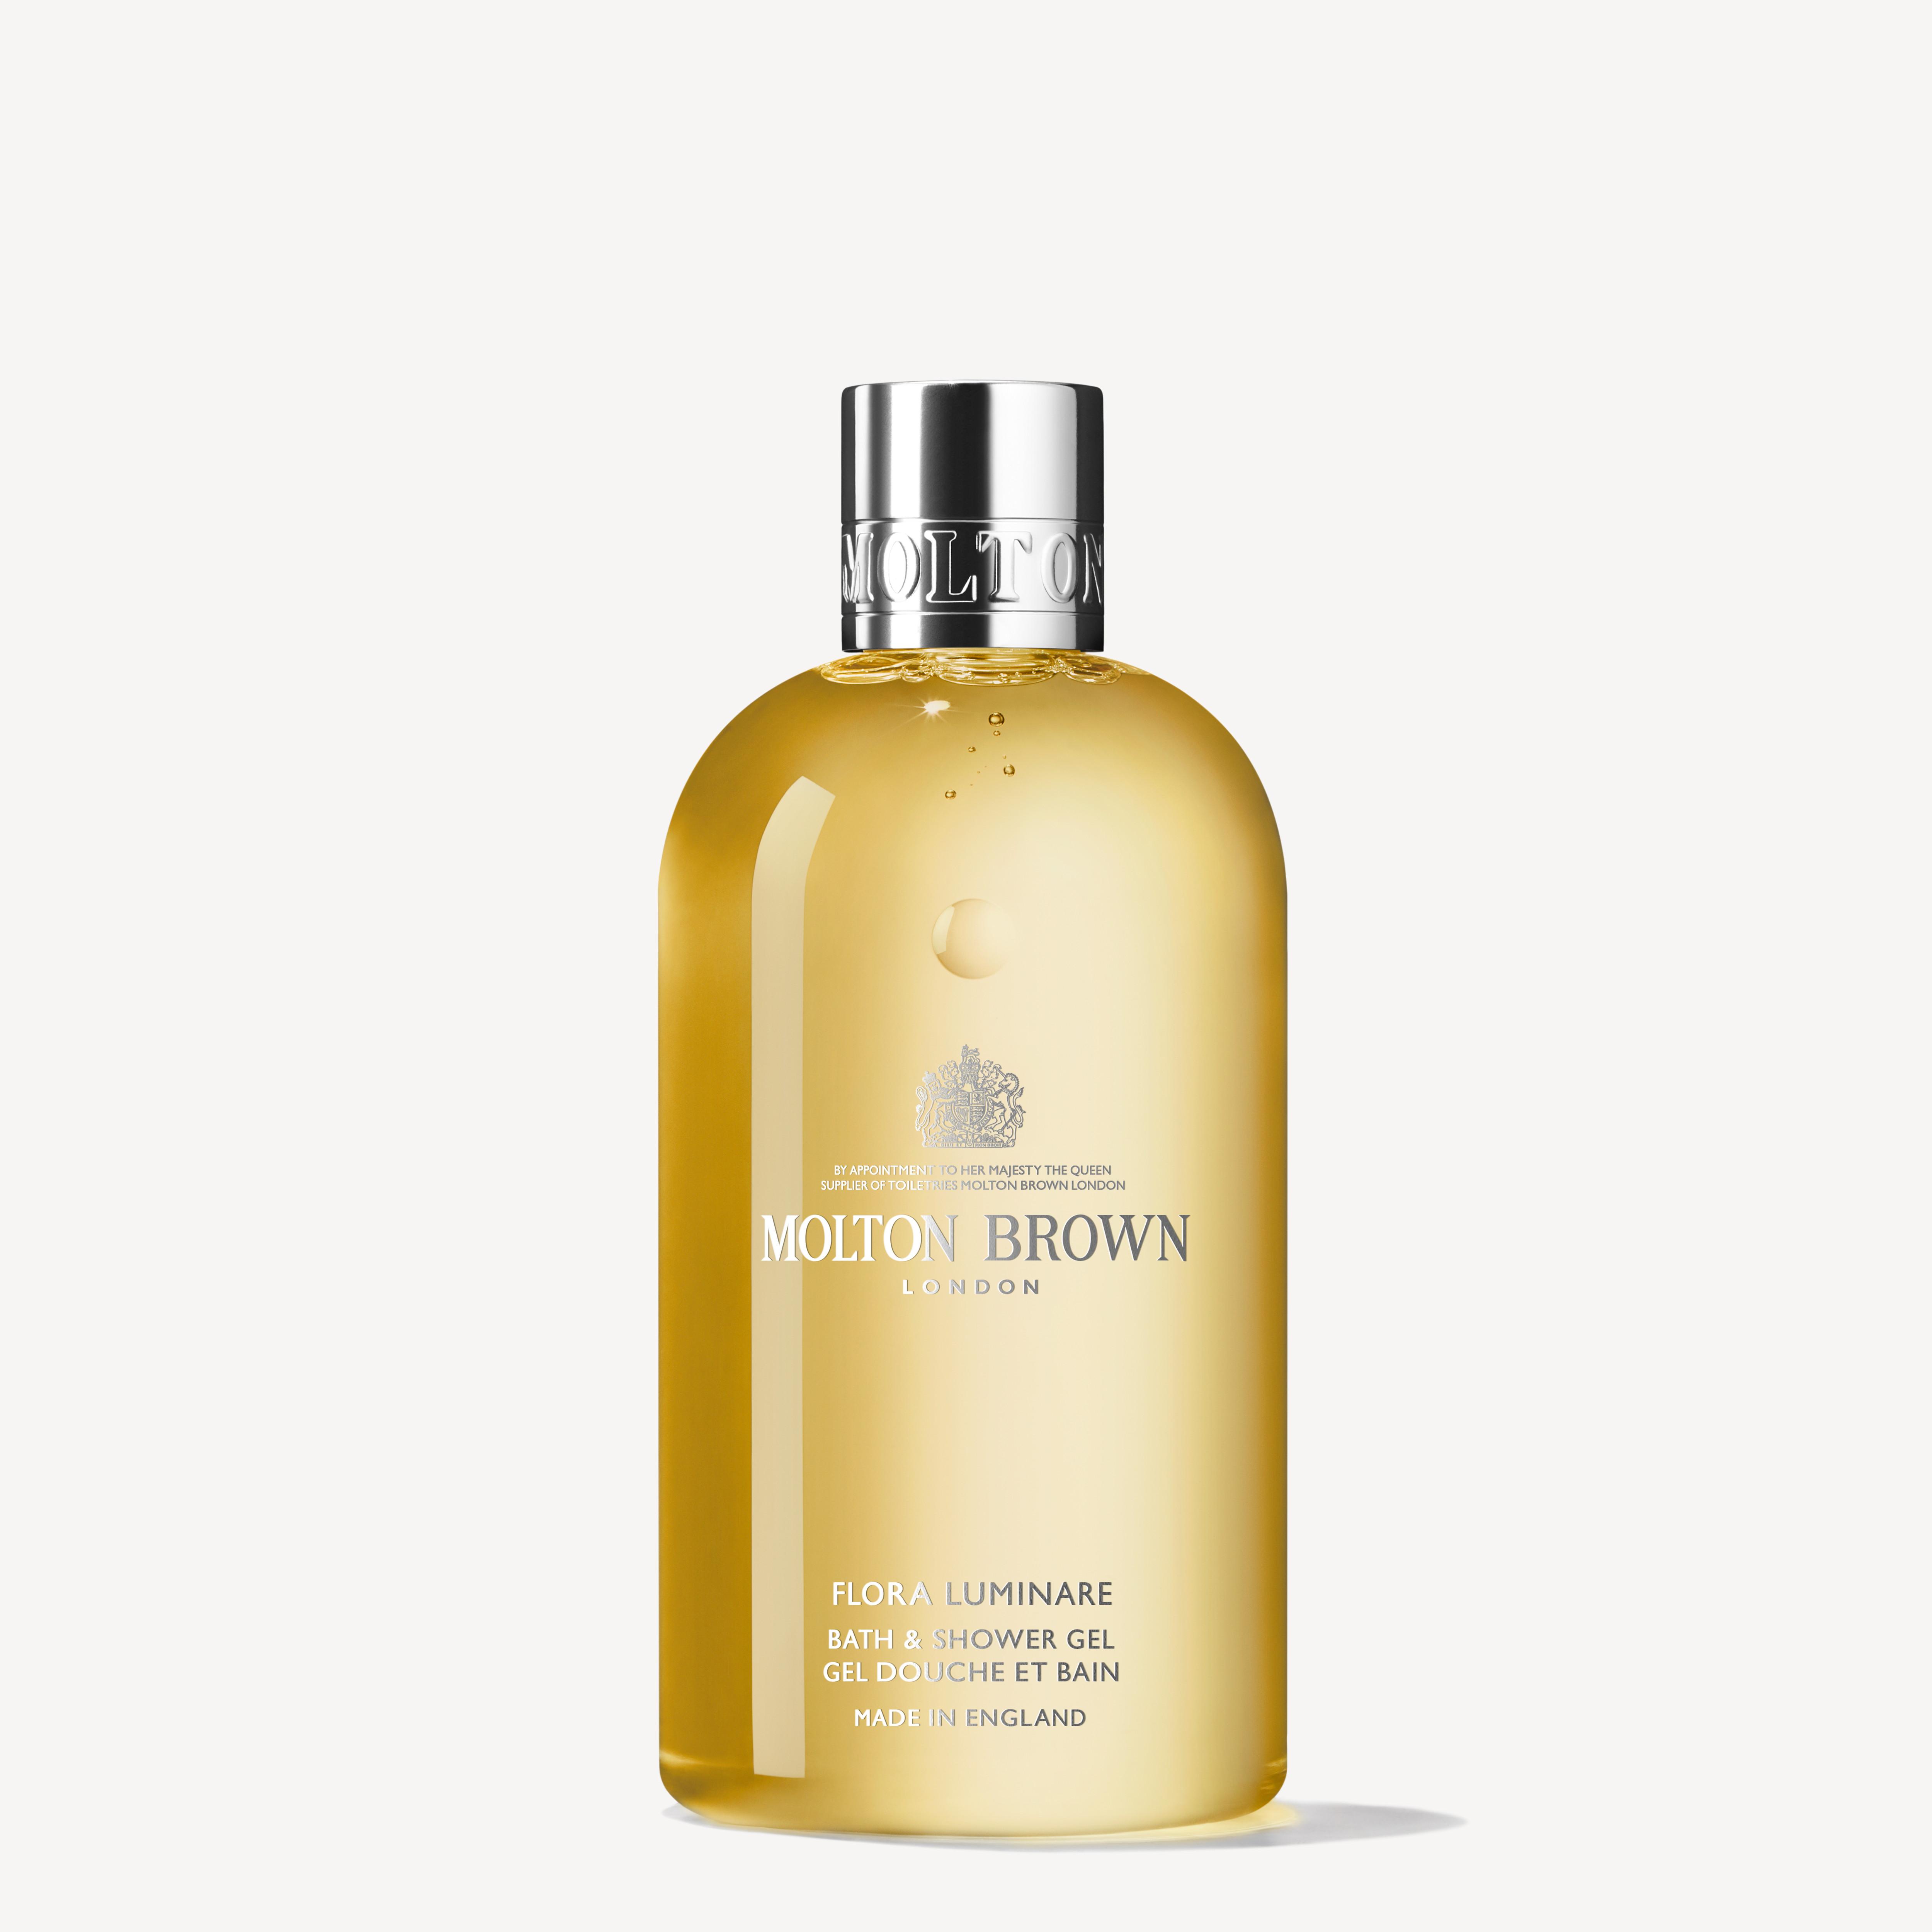 Molton Brown Flora Luminare Bath & Shower Gel 300ml